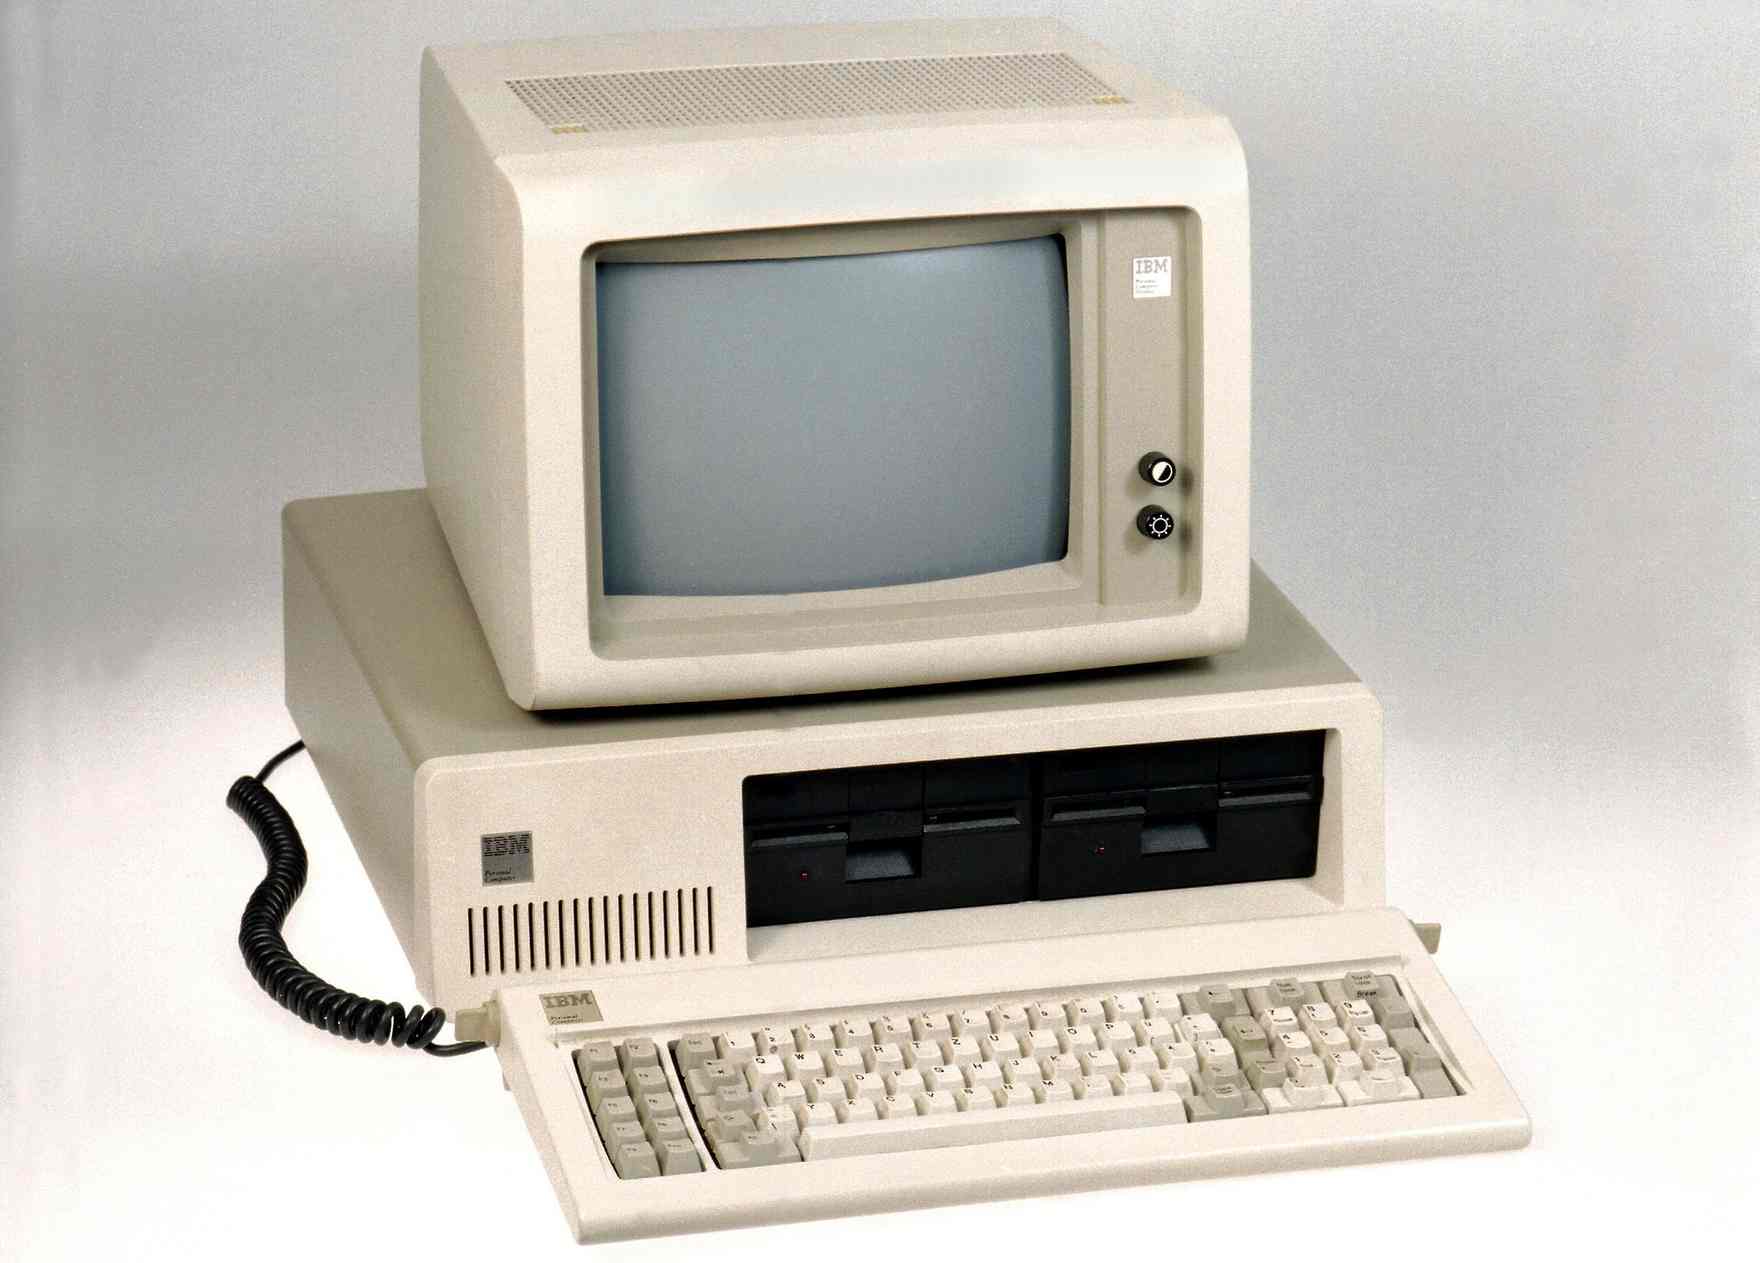 IBM Personal Computer, 1981